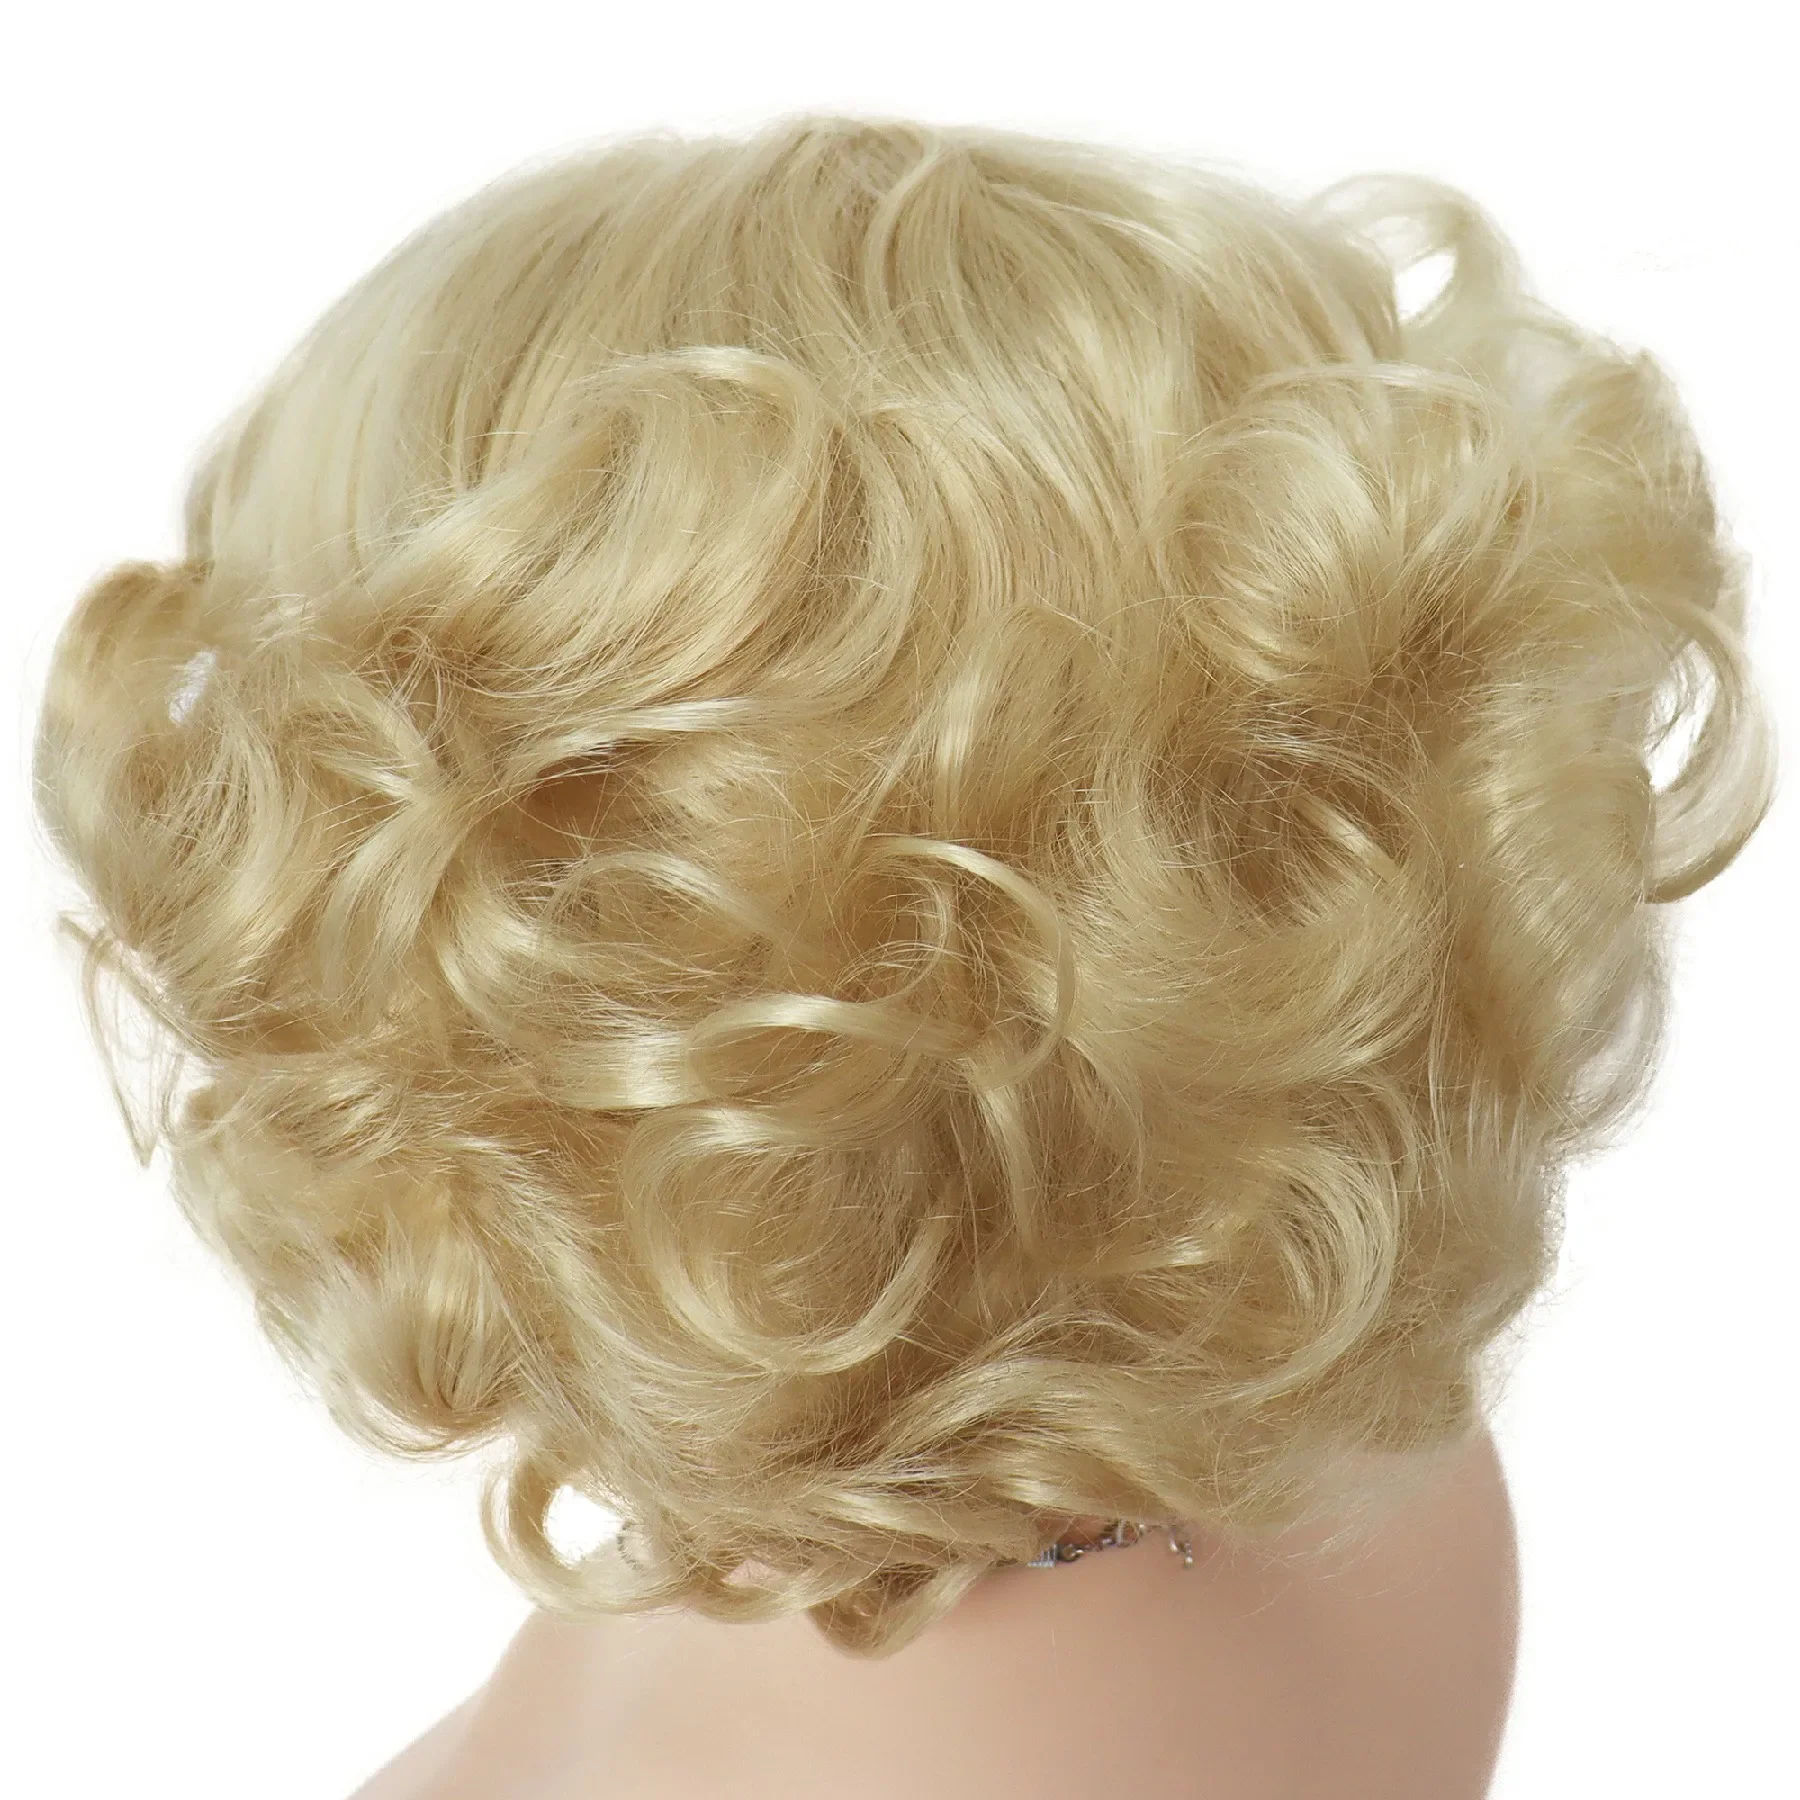 GNIMEGIL-Perruque Cosplay Synthétique Courte Bouclée, Cheveux Blonds Platine pour Femmes Blanches, Fluffy Curls, Flip 60s Testosterone Sby, Coiffure Perruques